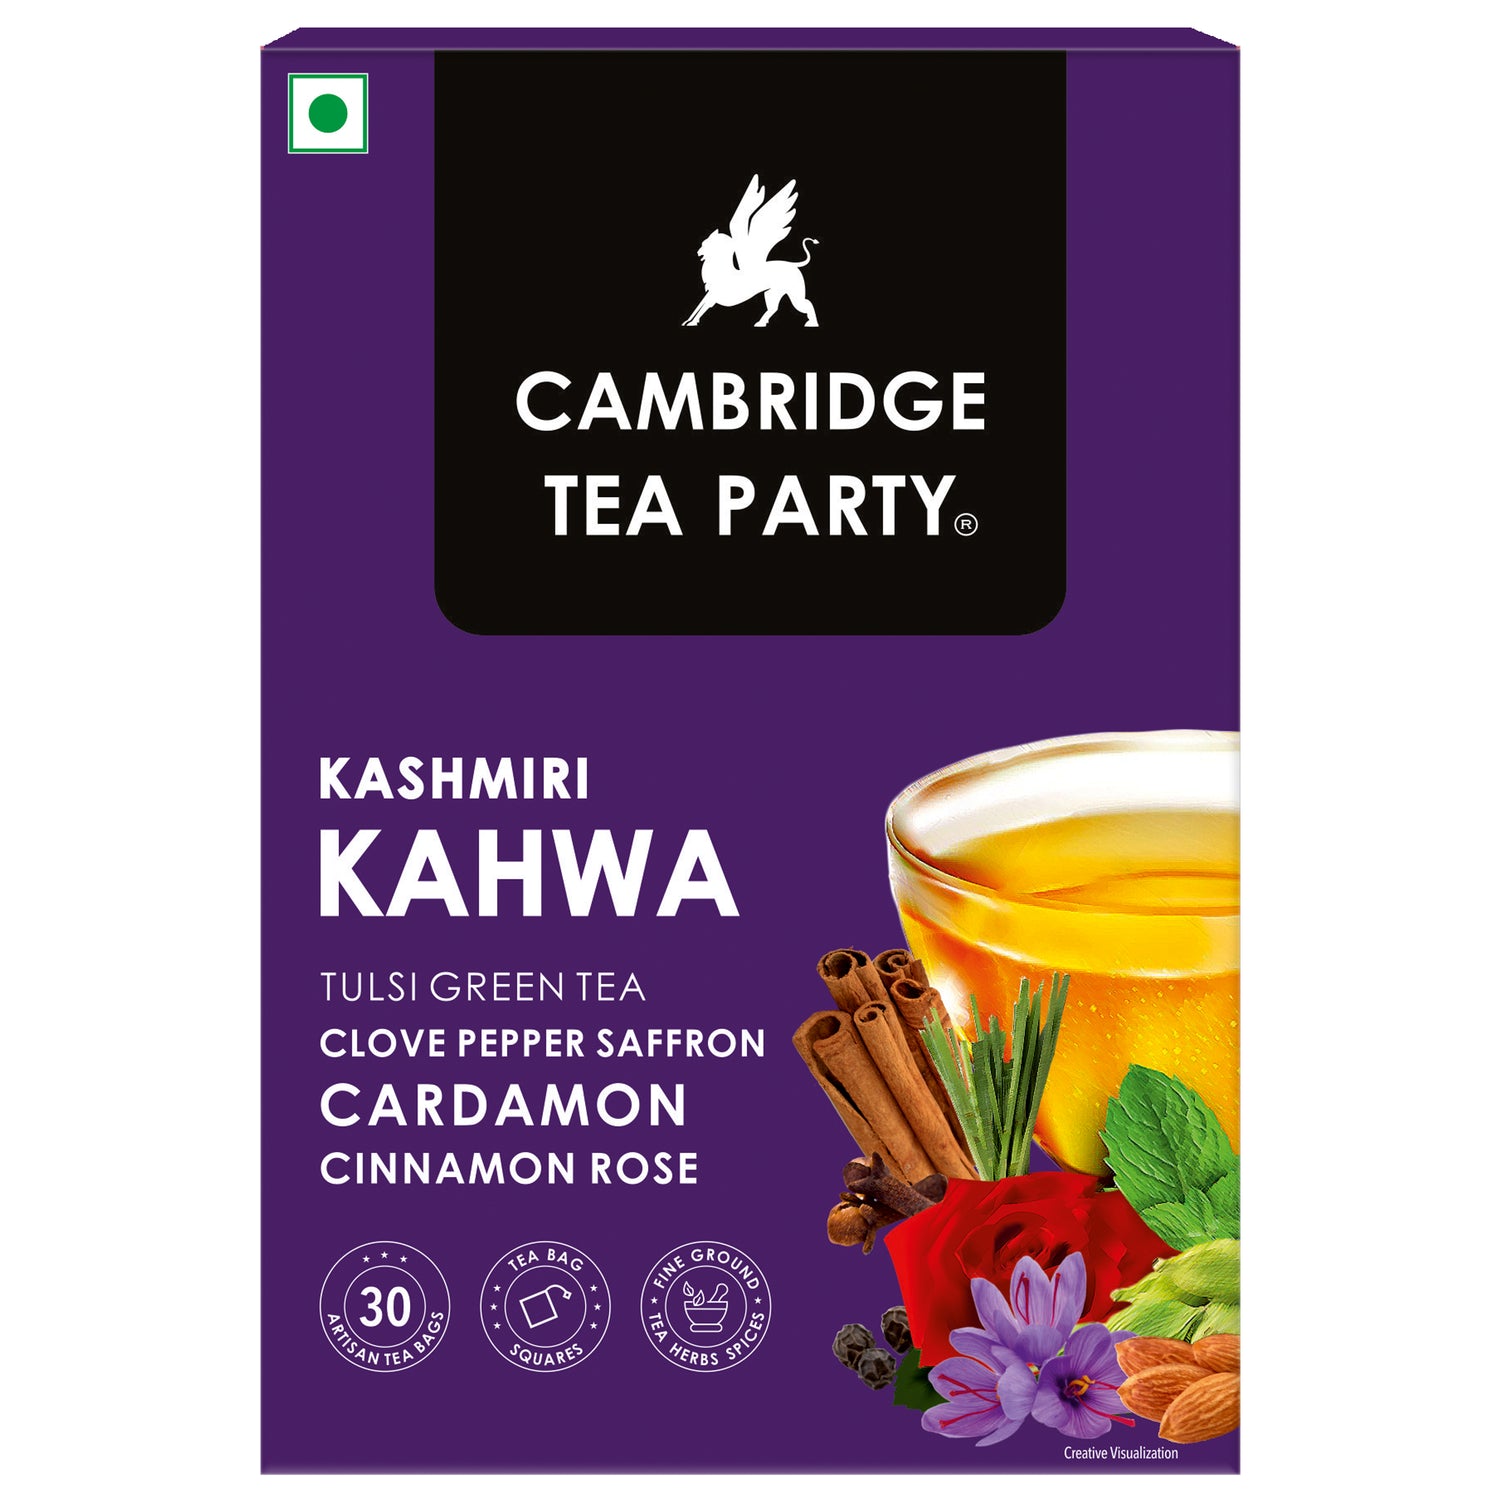 Amazon.com : Buddha Teas - Saffron & Green Tea - For Health & Wellbeing -  Wild Crafted Tea - With Antioxidants & Minerals - Clean Ingredients -  Caffeinated - OU Kosher -